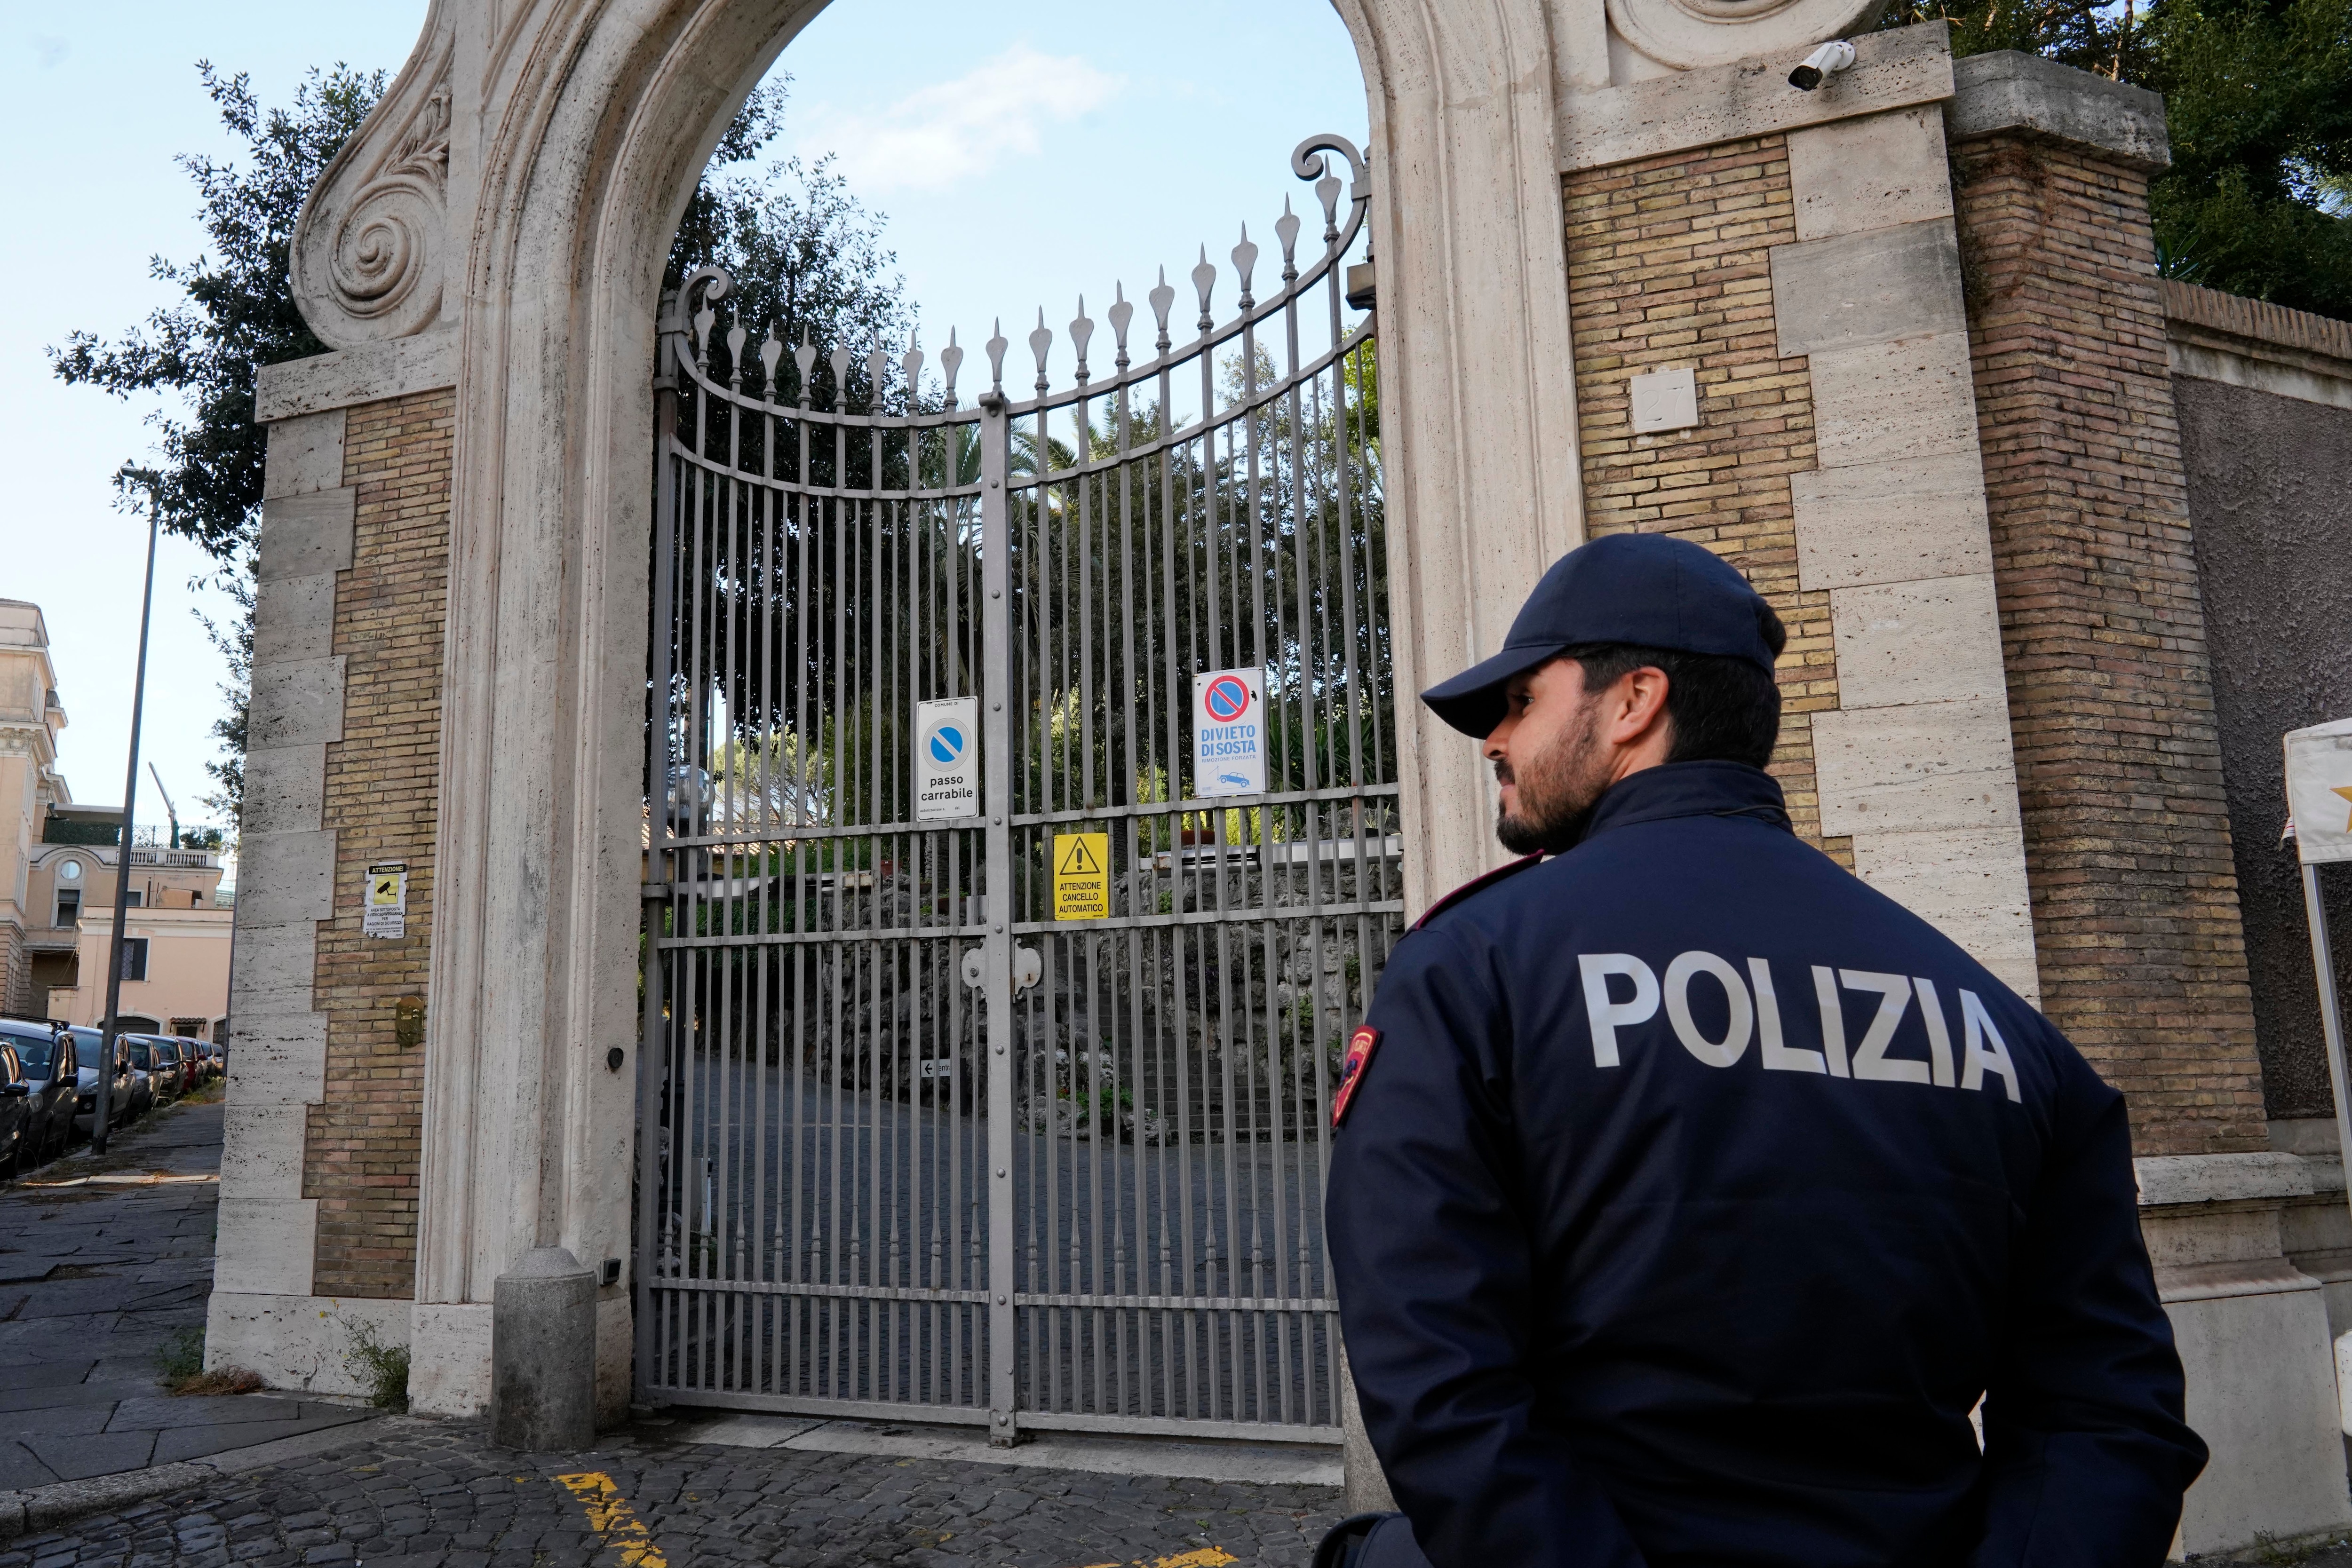 Remains Found At Vatican May Hold Clues To Missing Teens Emanuela Orlandi, Mirella ...